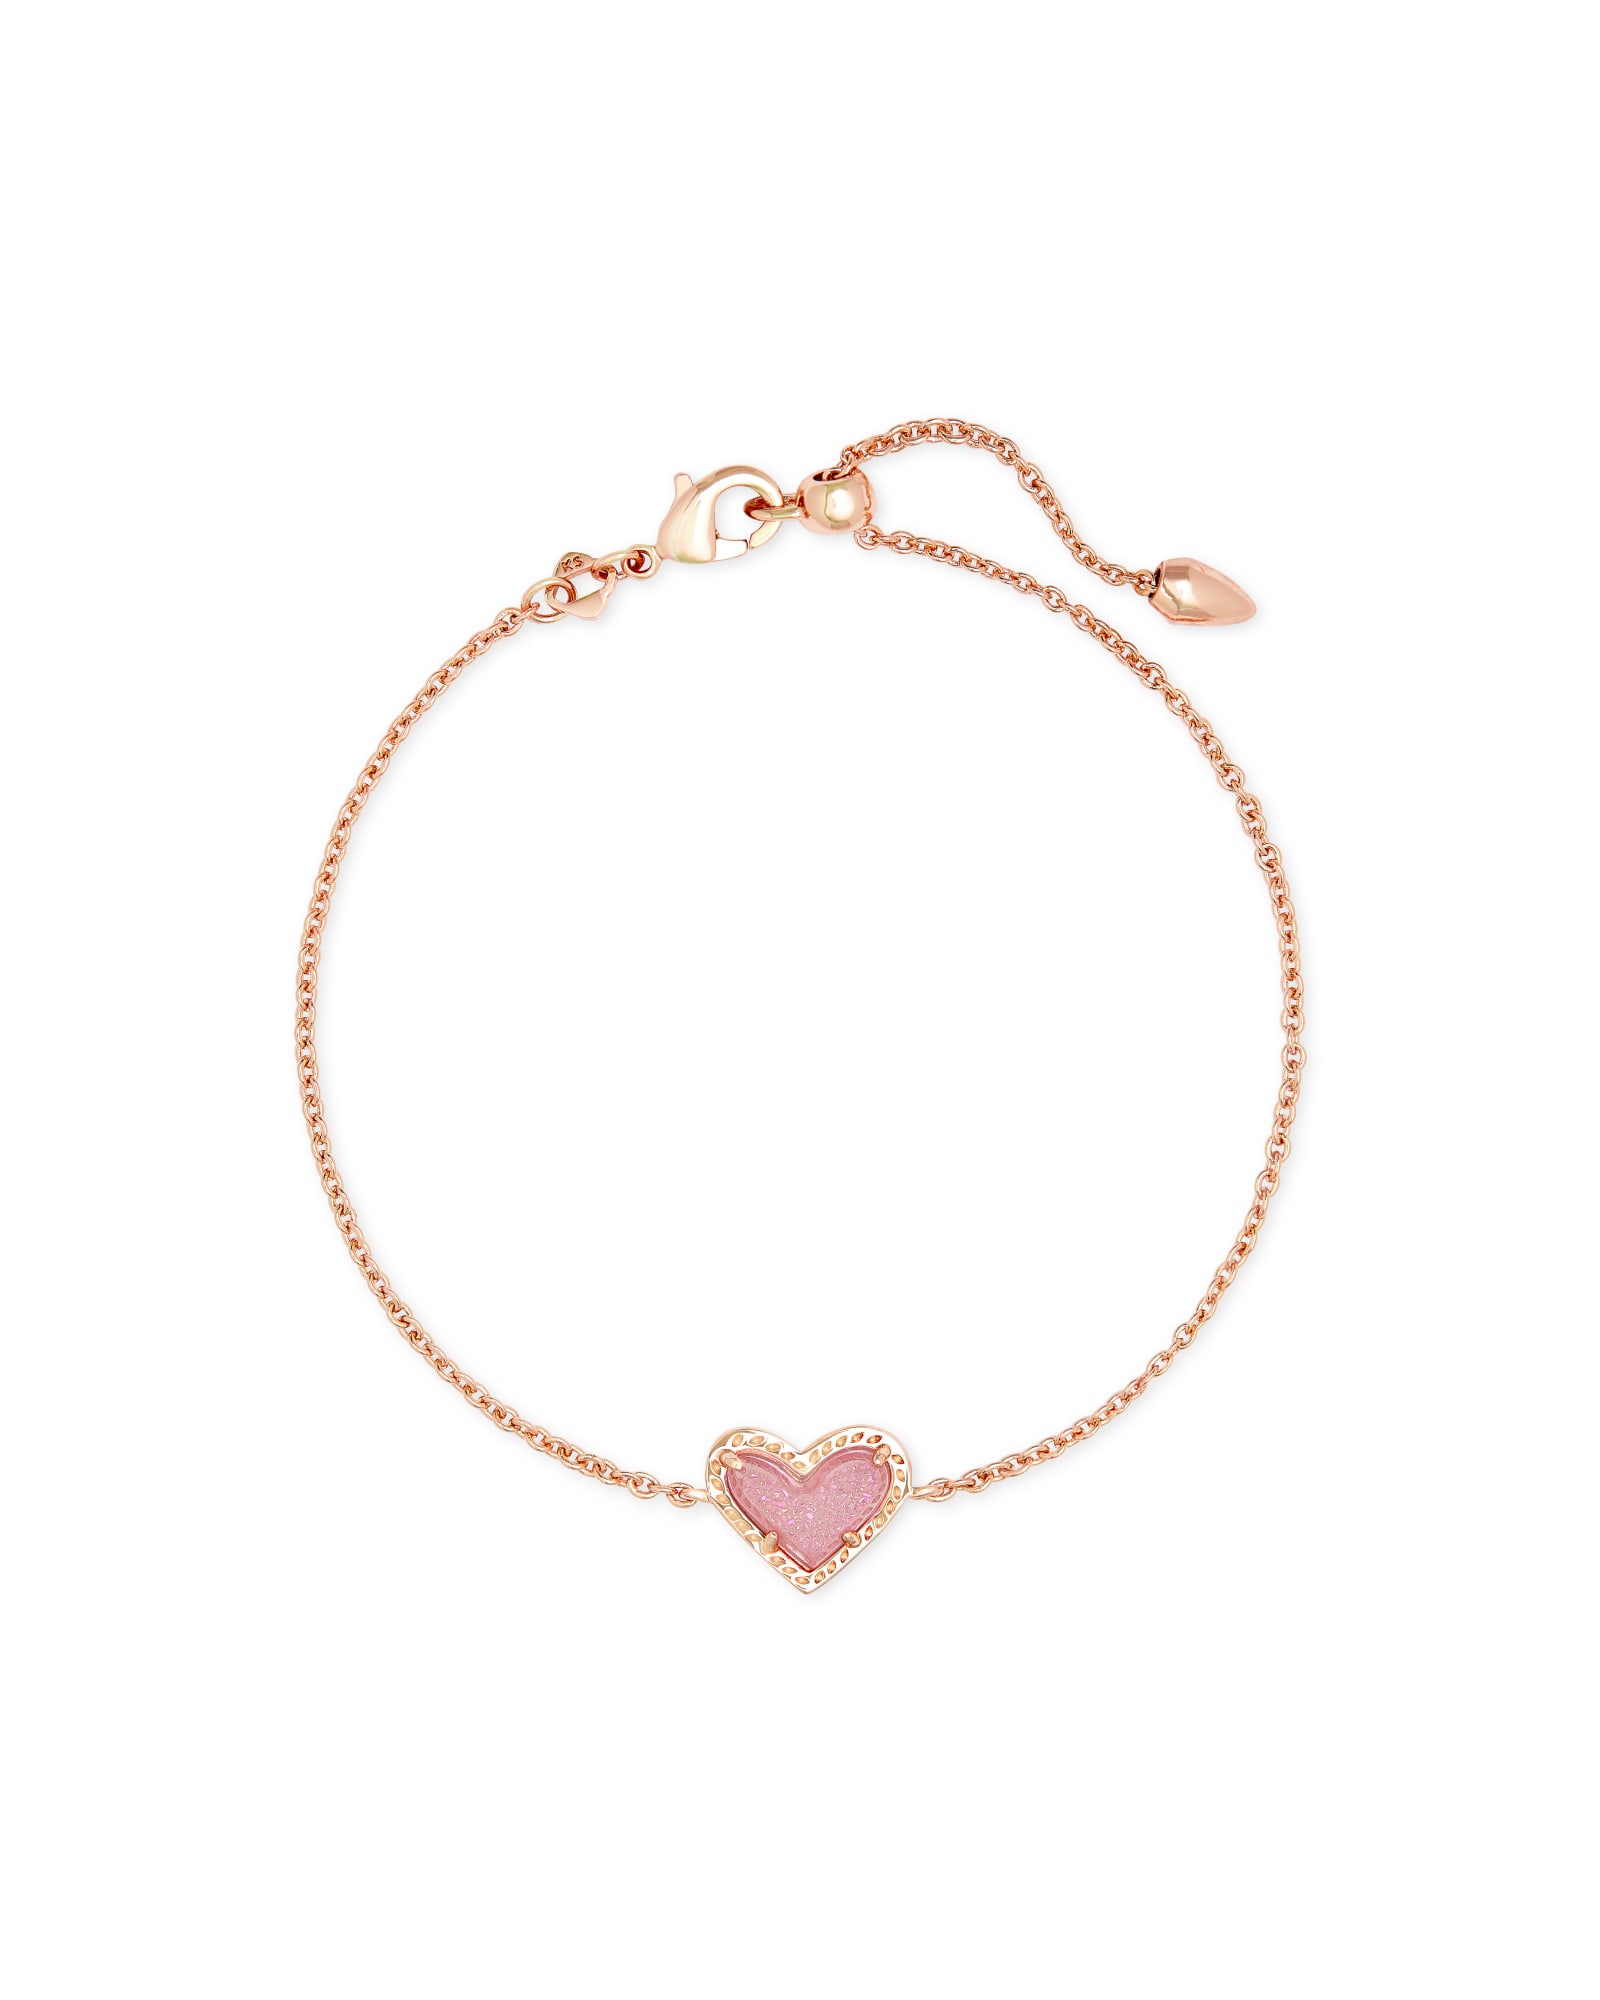 Kendra Scott Ari Heart Rose Gold Chain Bracelet in Light Pink | Drusy